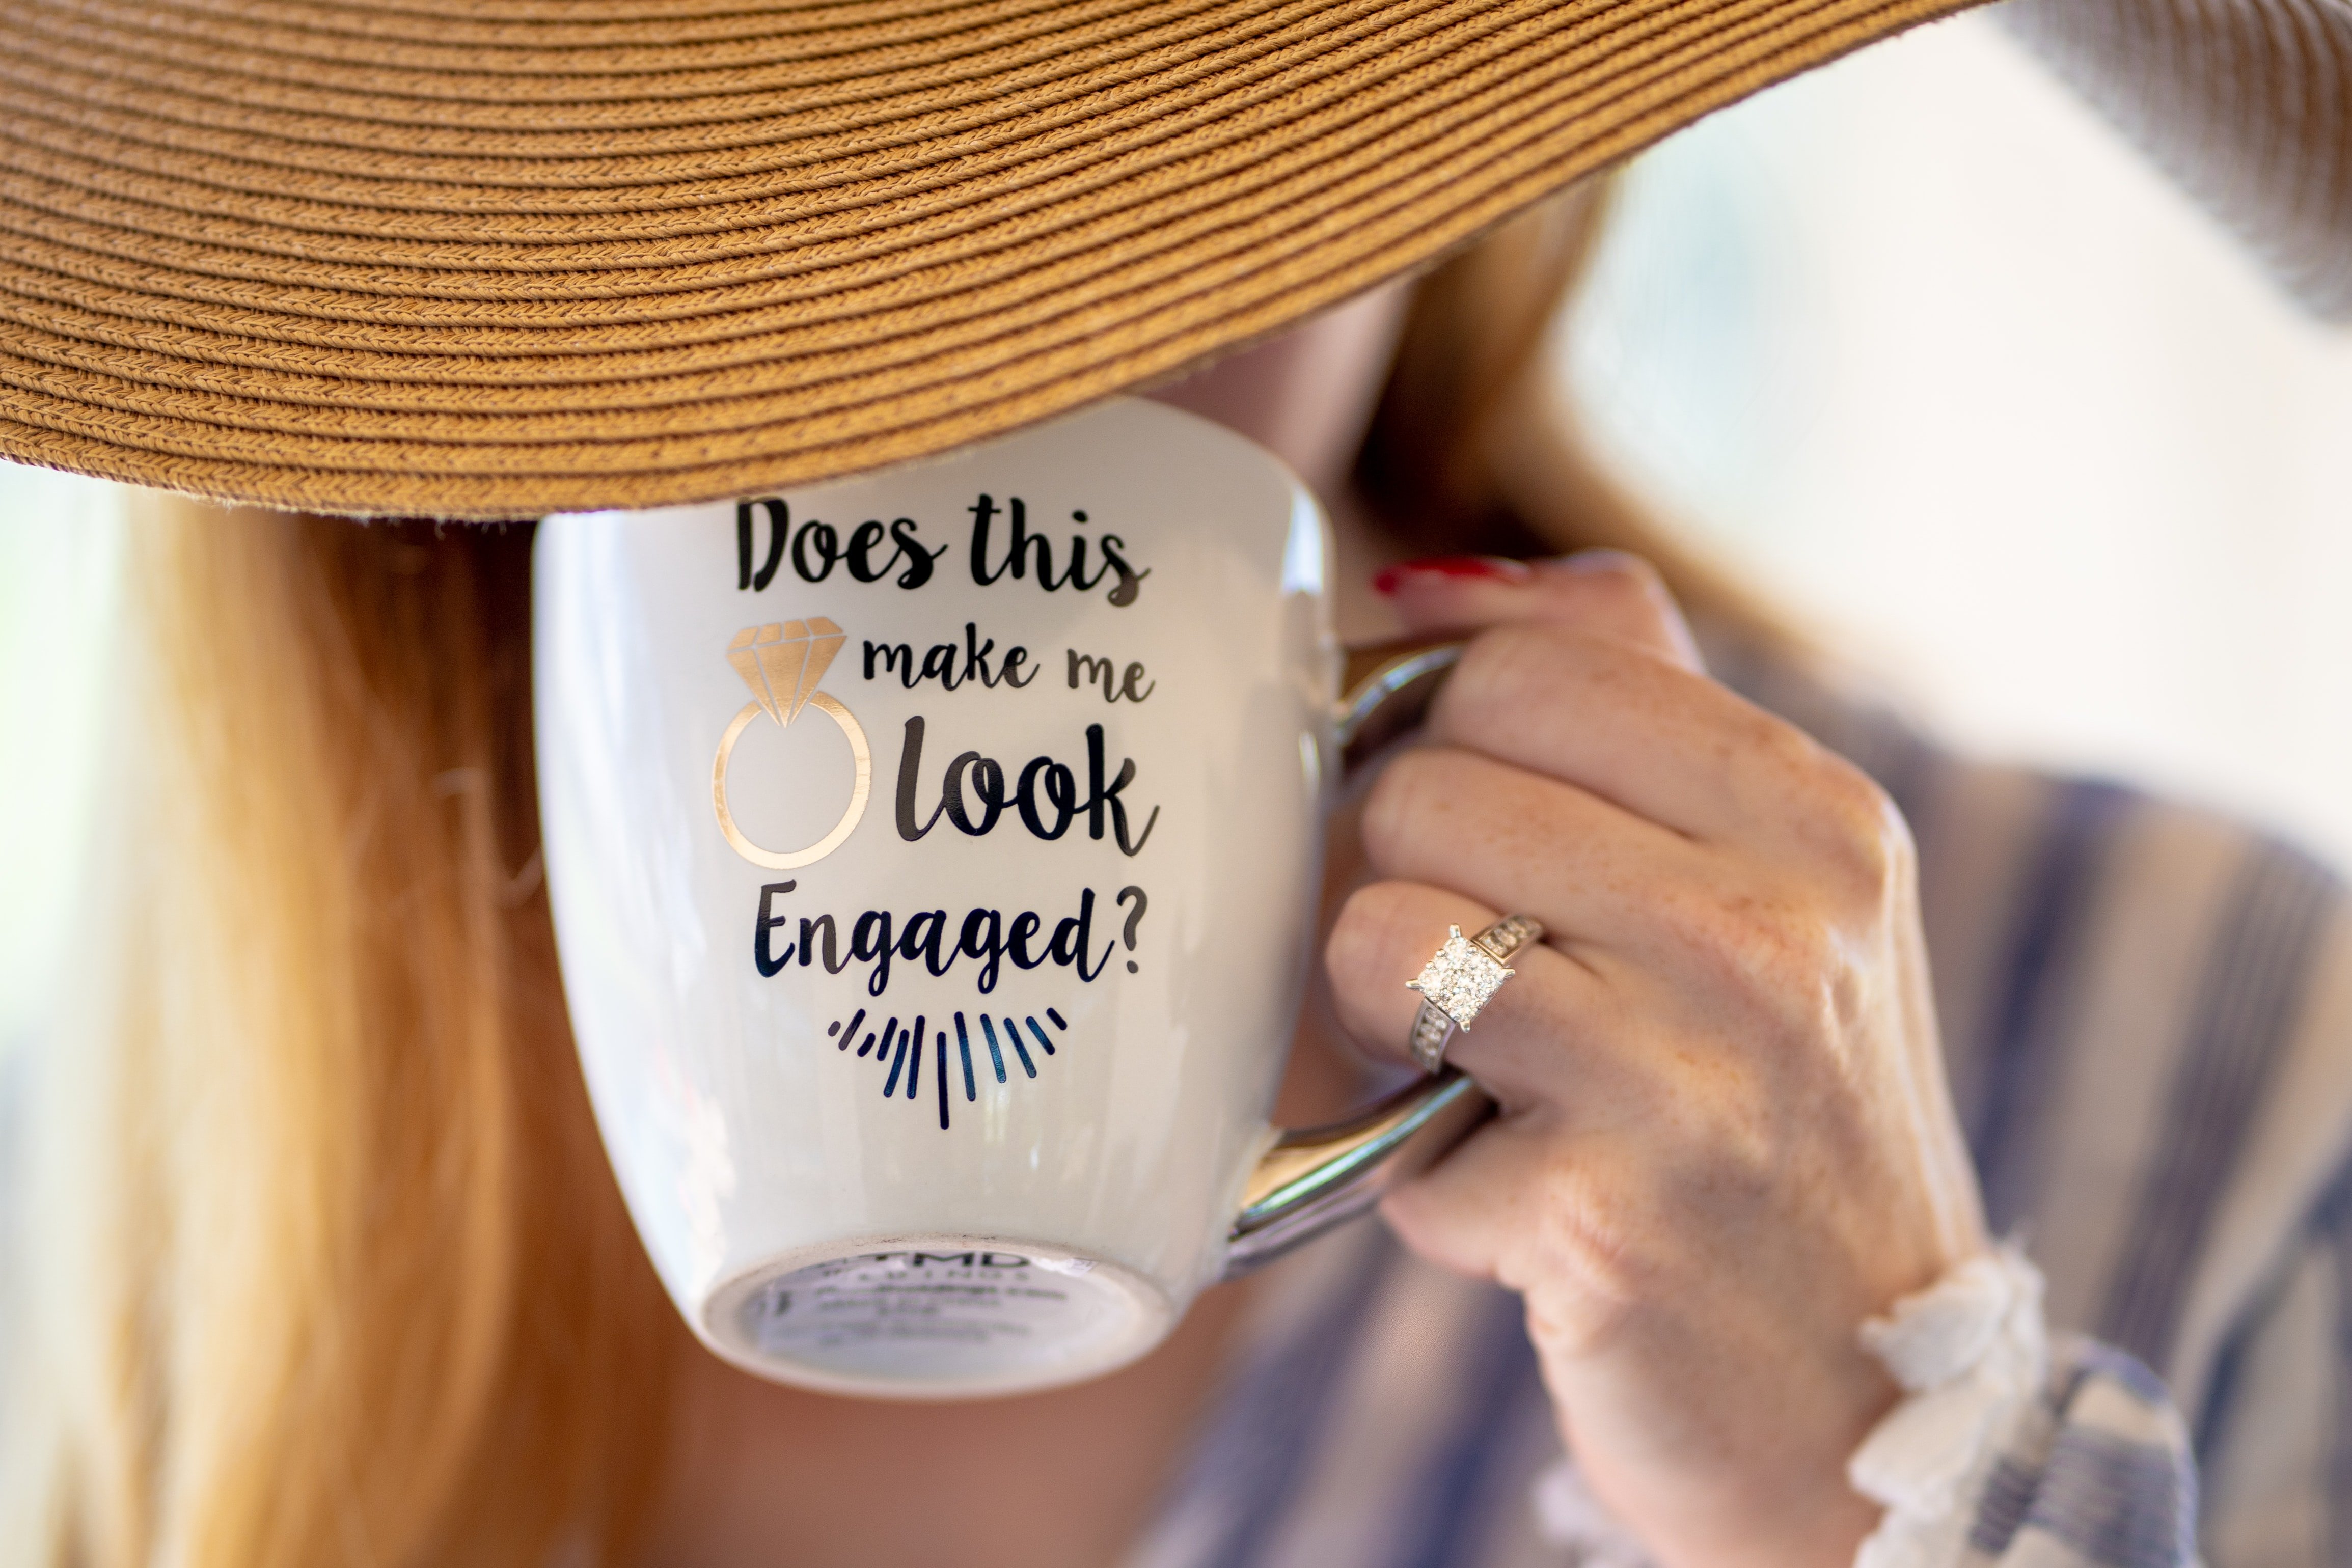 Woman flaunting her engagement ring | Photo: Unsplash